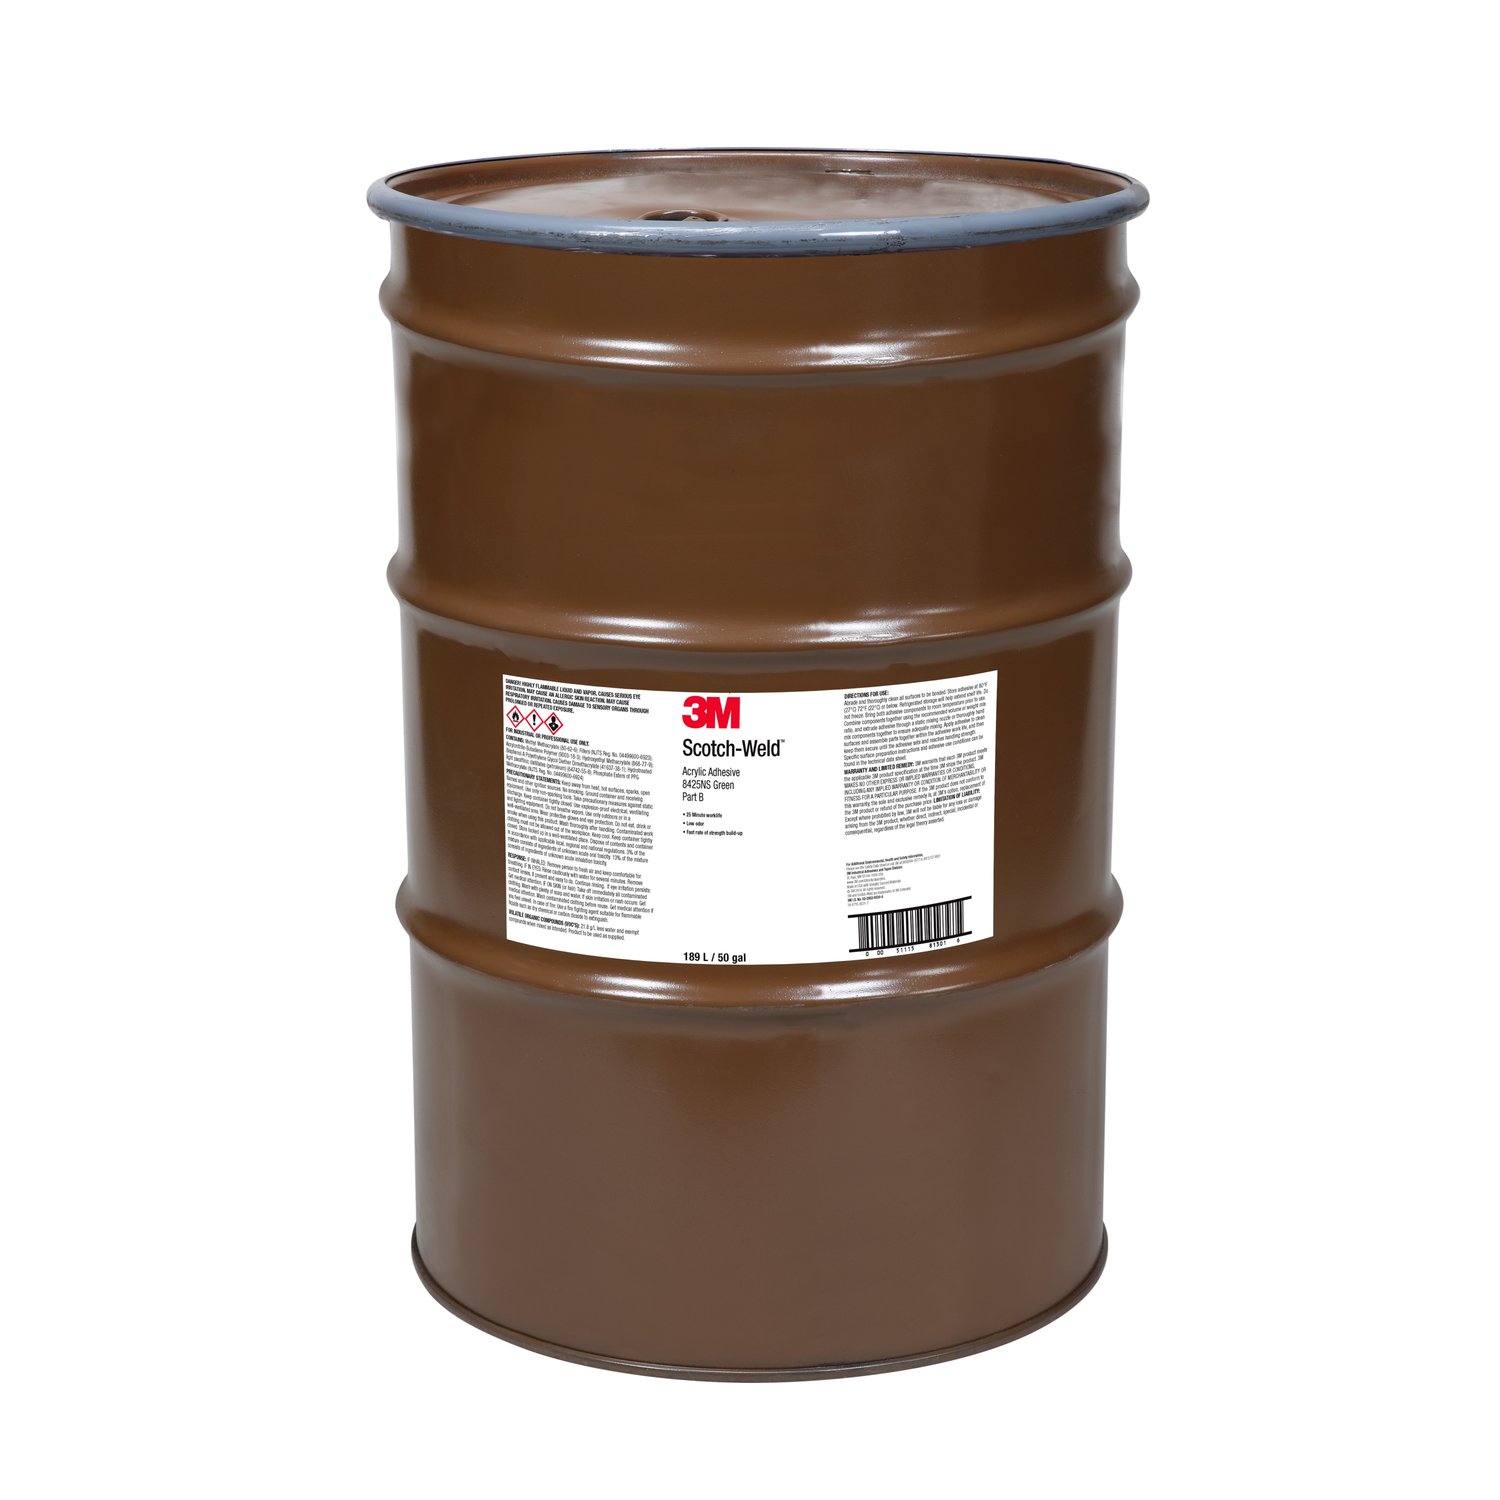 7100084535 - 3M Scotch-Weld Acrylic Adhesive 8425NS, Green, Part B, 55 Gallon (50
Gallon Net), Drum